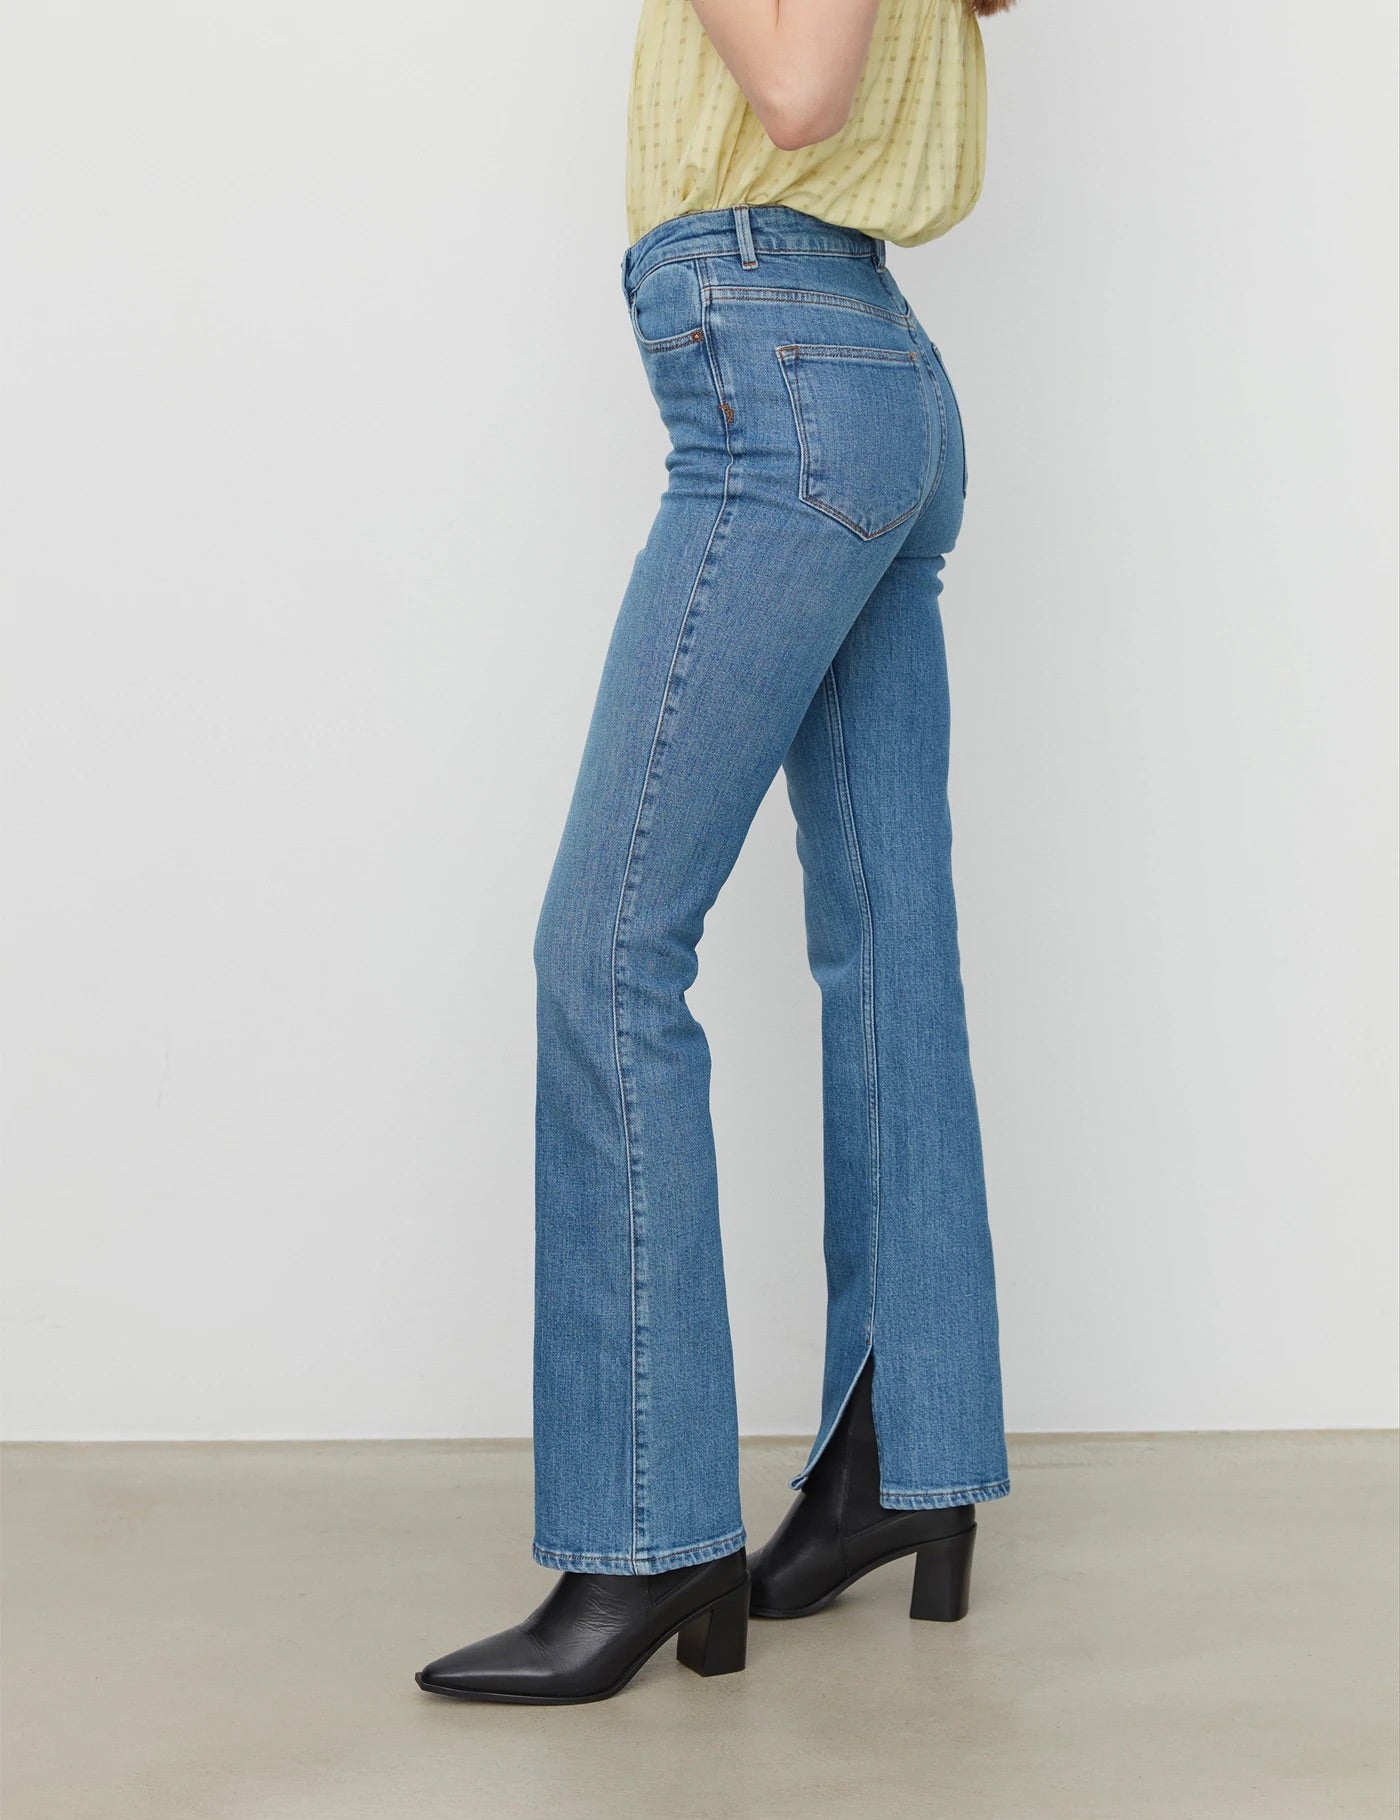 Fiona TT Denim Jeans - Babs The Label